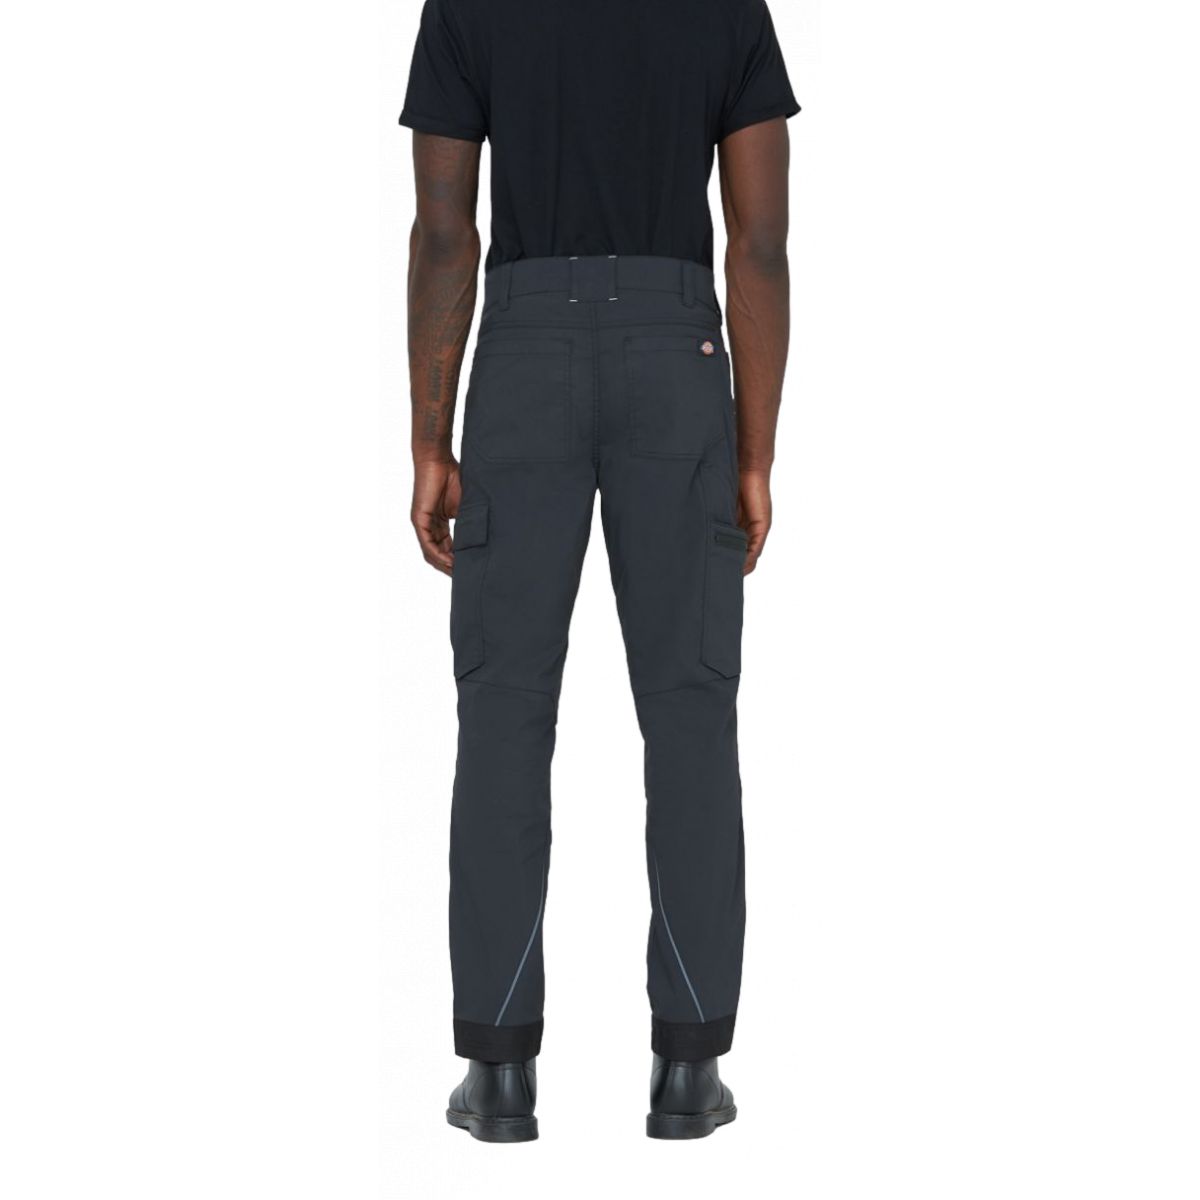 Pantalon léger Flex Noir - Dickies - Taille 38 3